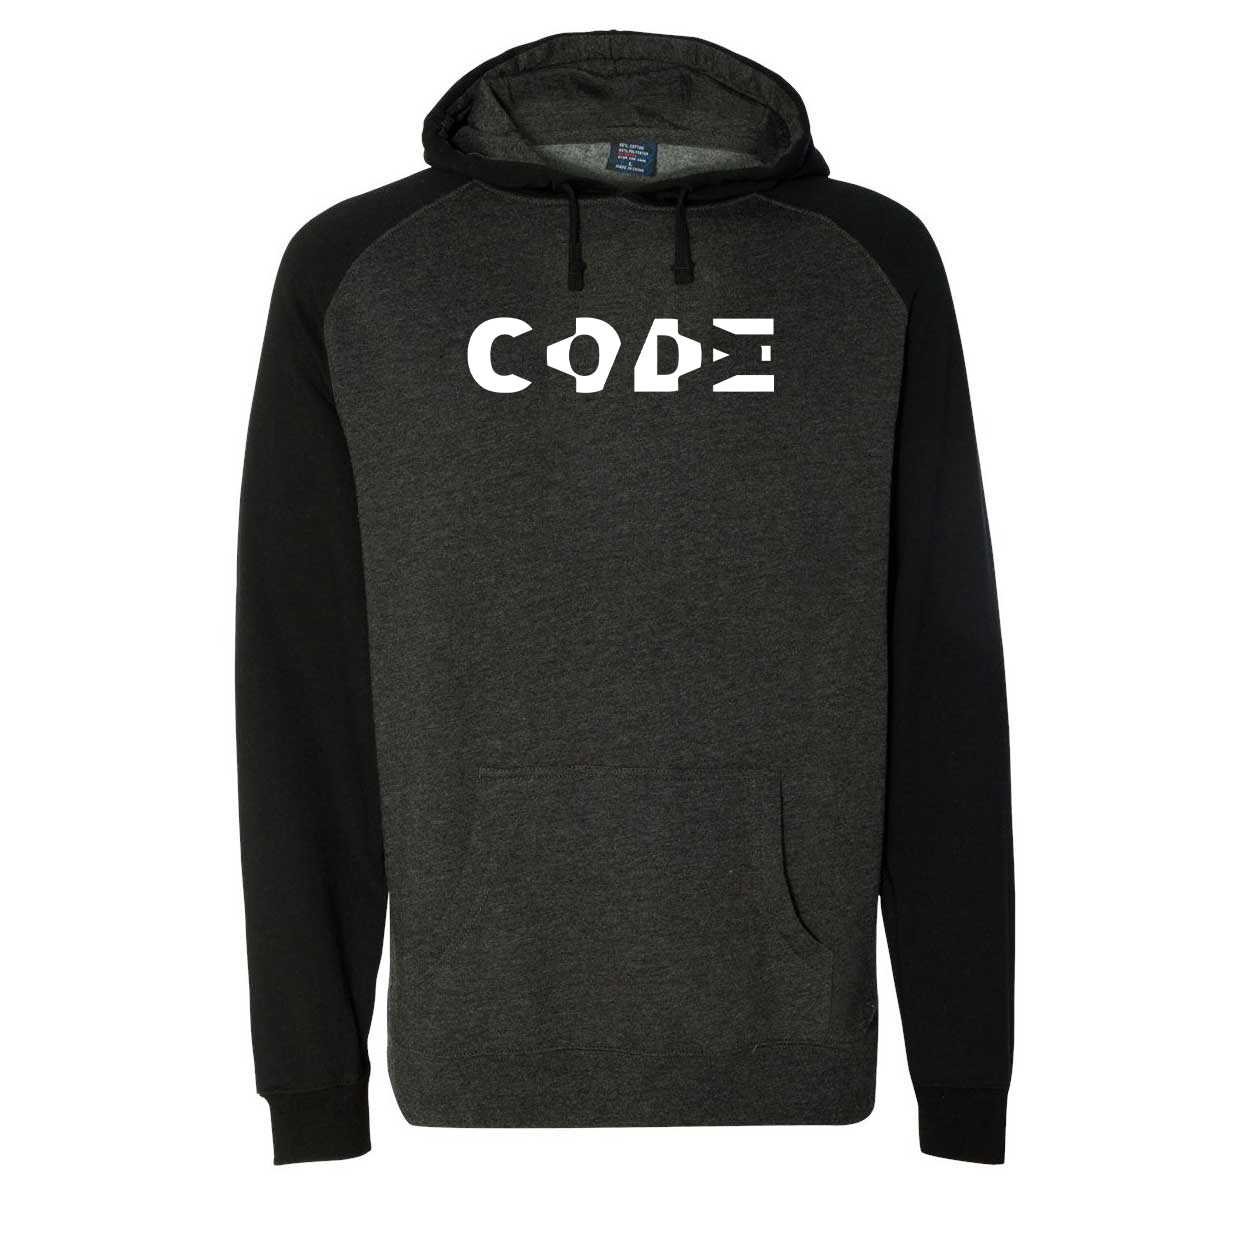 Code Tag Logo Classic Raglan Hooded Pullover Sweatshirt Charcoal/Heather Black (White Logo)